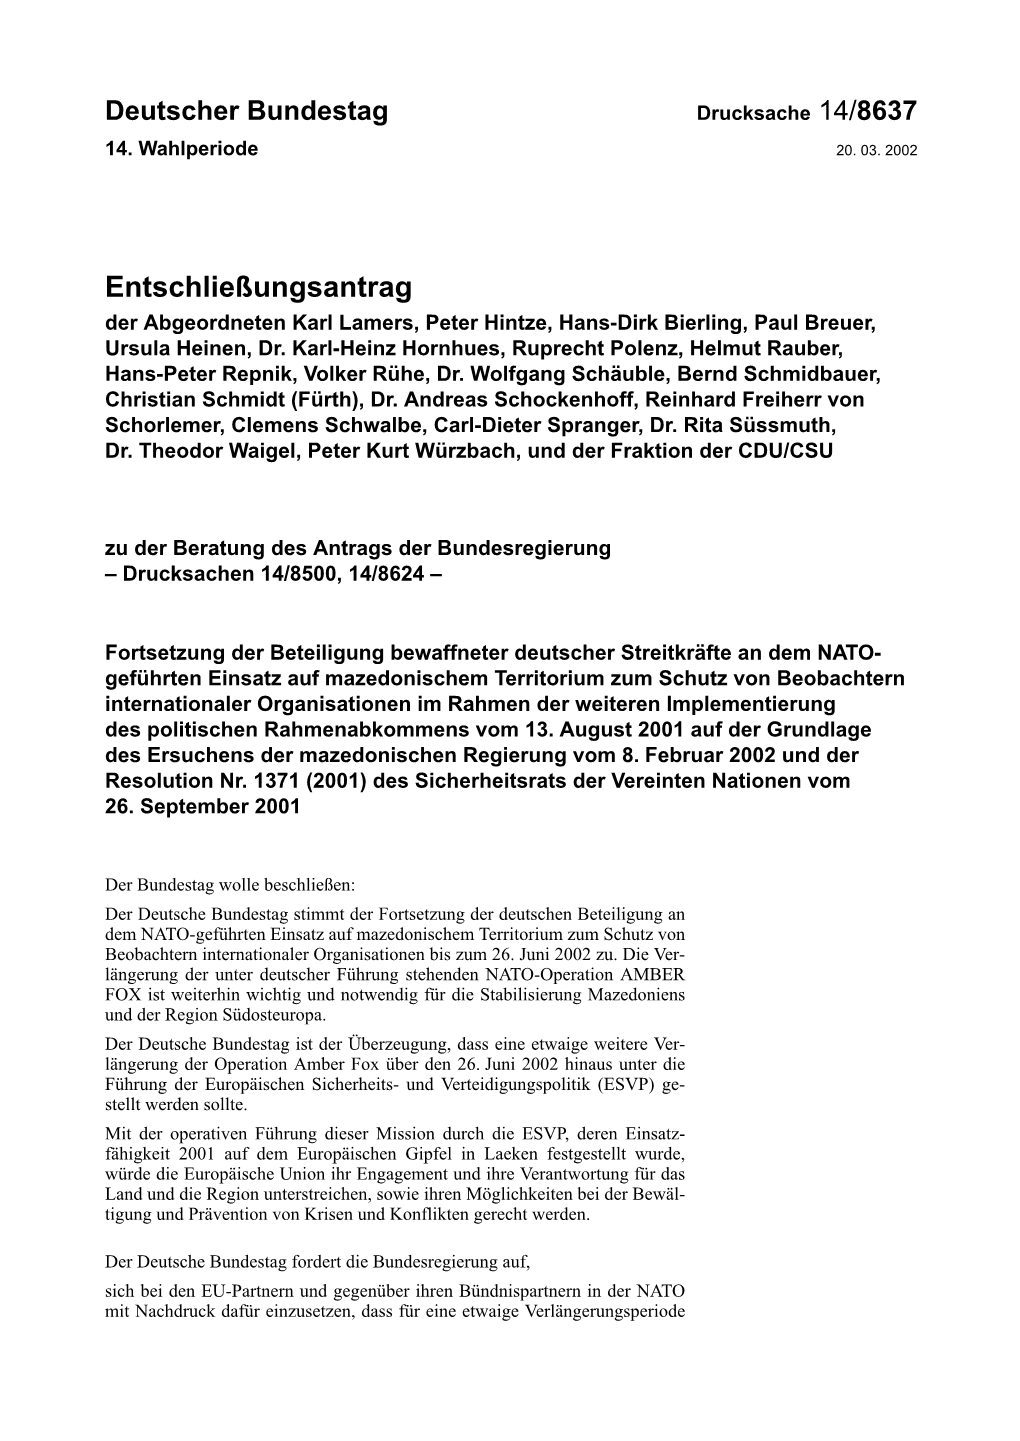 Entschließungsantrag Der Abgeordneten Karl Lamers, Peter Hintze, Hans-Dirk Bierling, Paul Breuer, Ursula Heinen, Dr